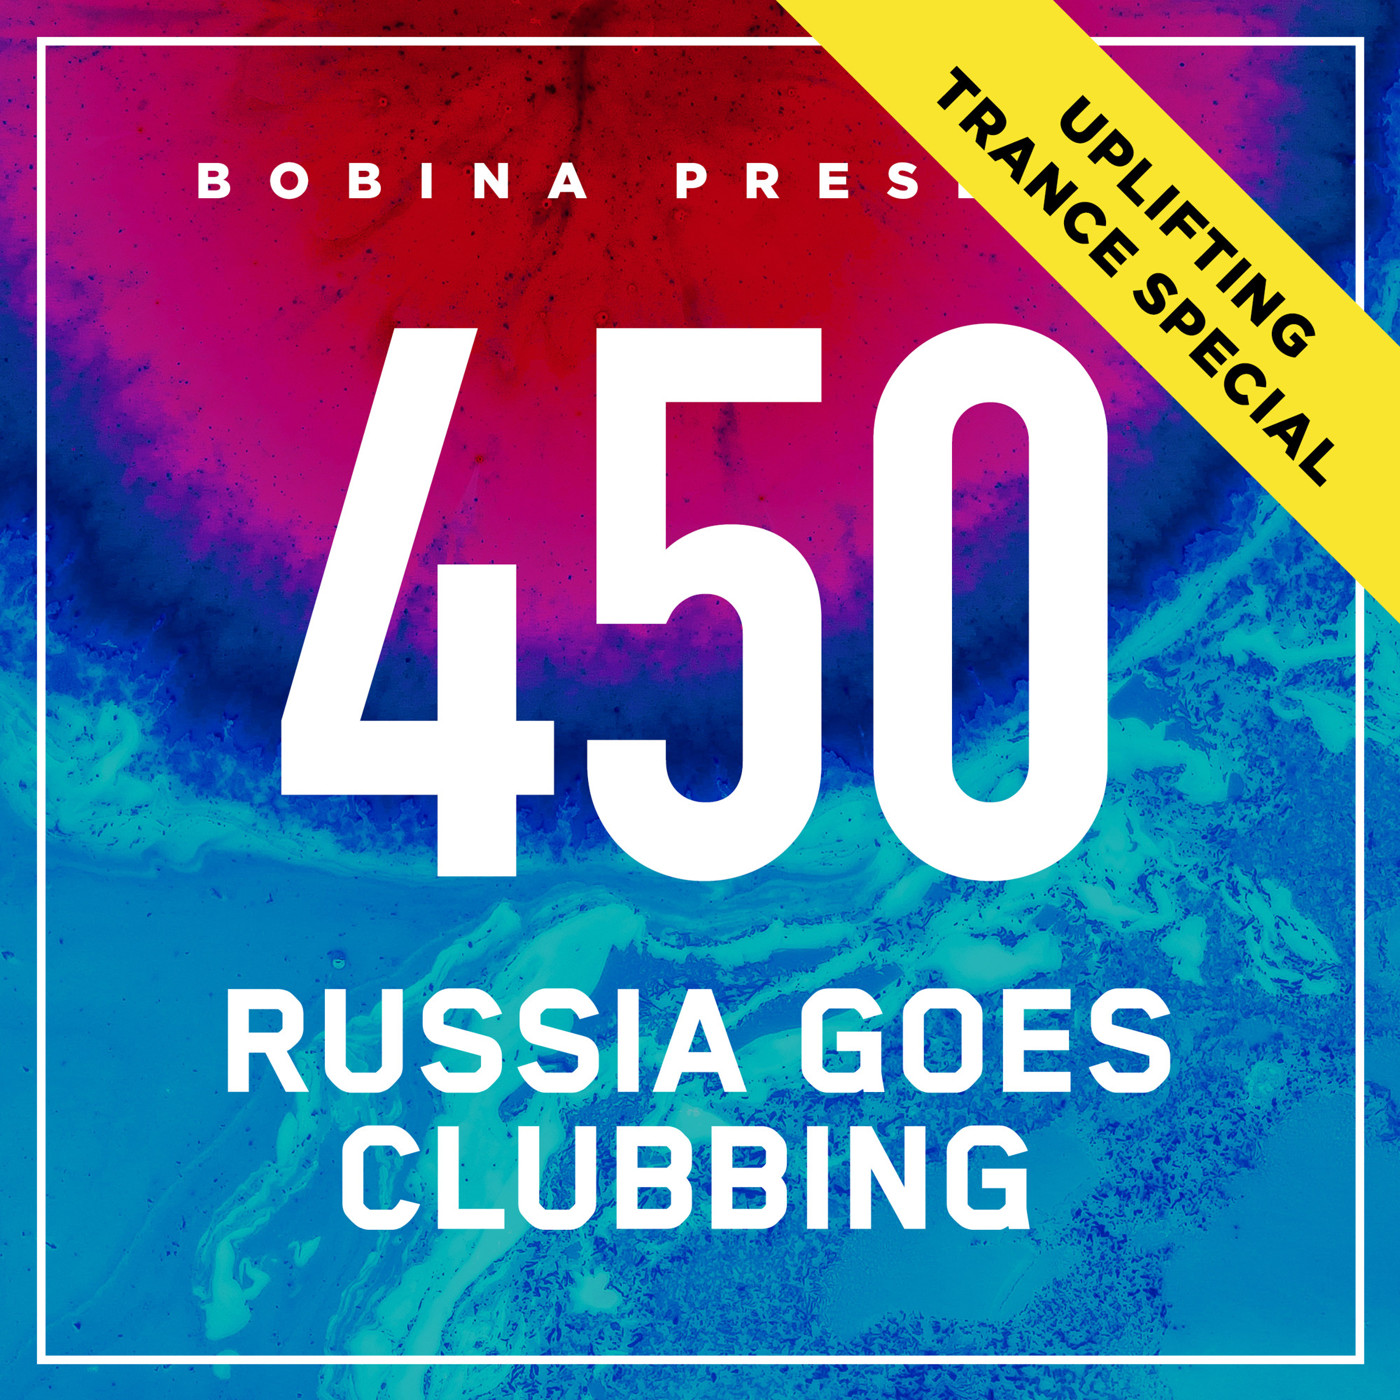 Bobina – Nr. 450 Russia Goes Clubbing [Uplifting Trance Special] (Rus)